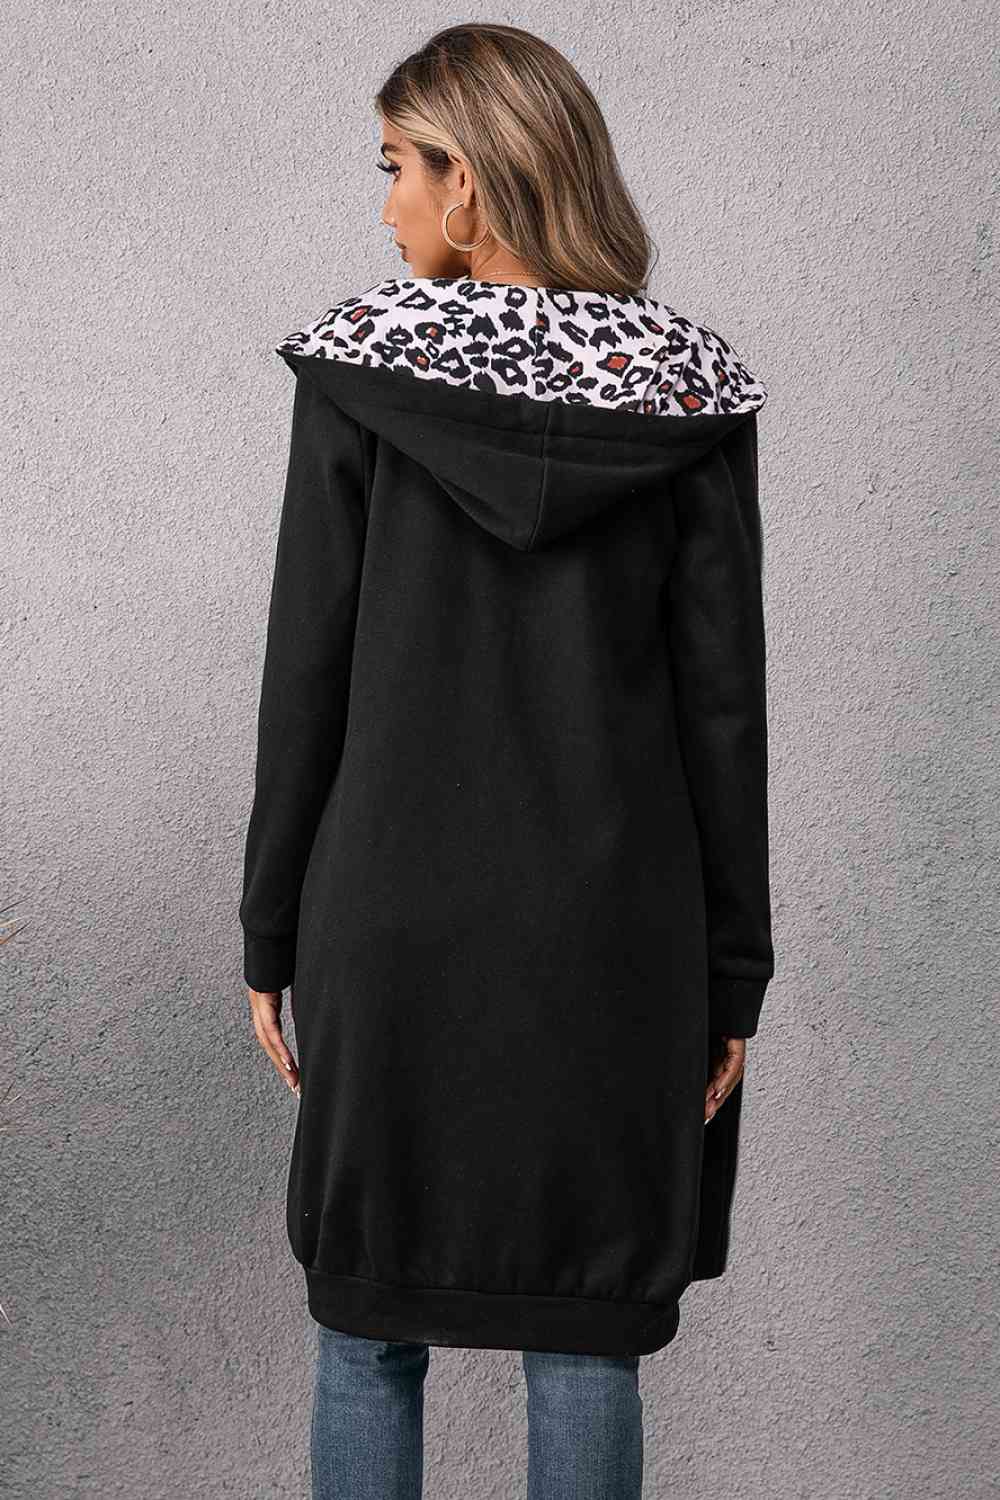 Black Leopard Spliced Drawstring Zip Up Hoodie Dress